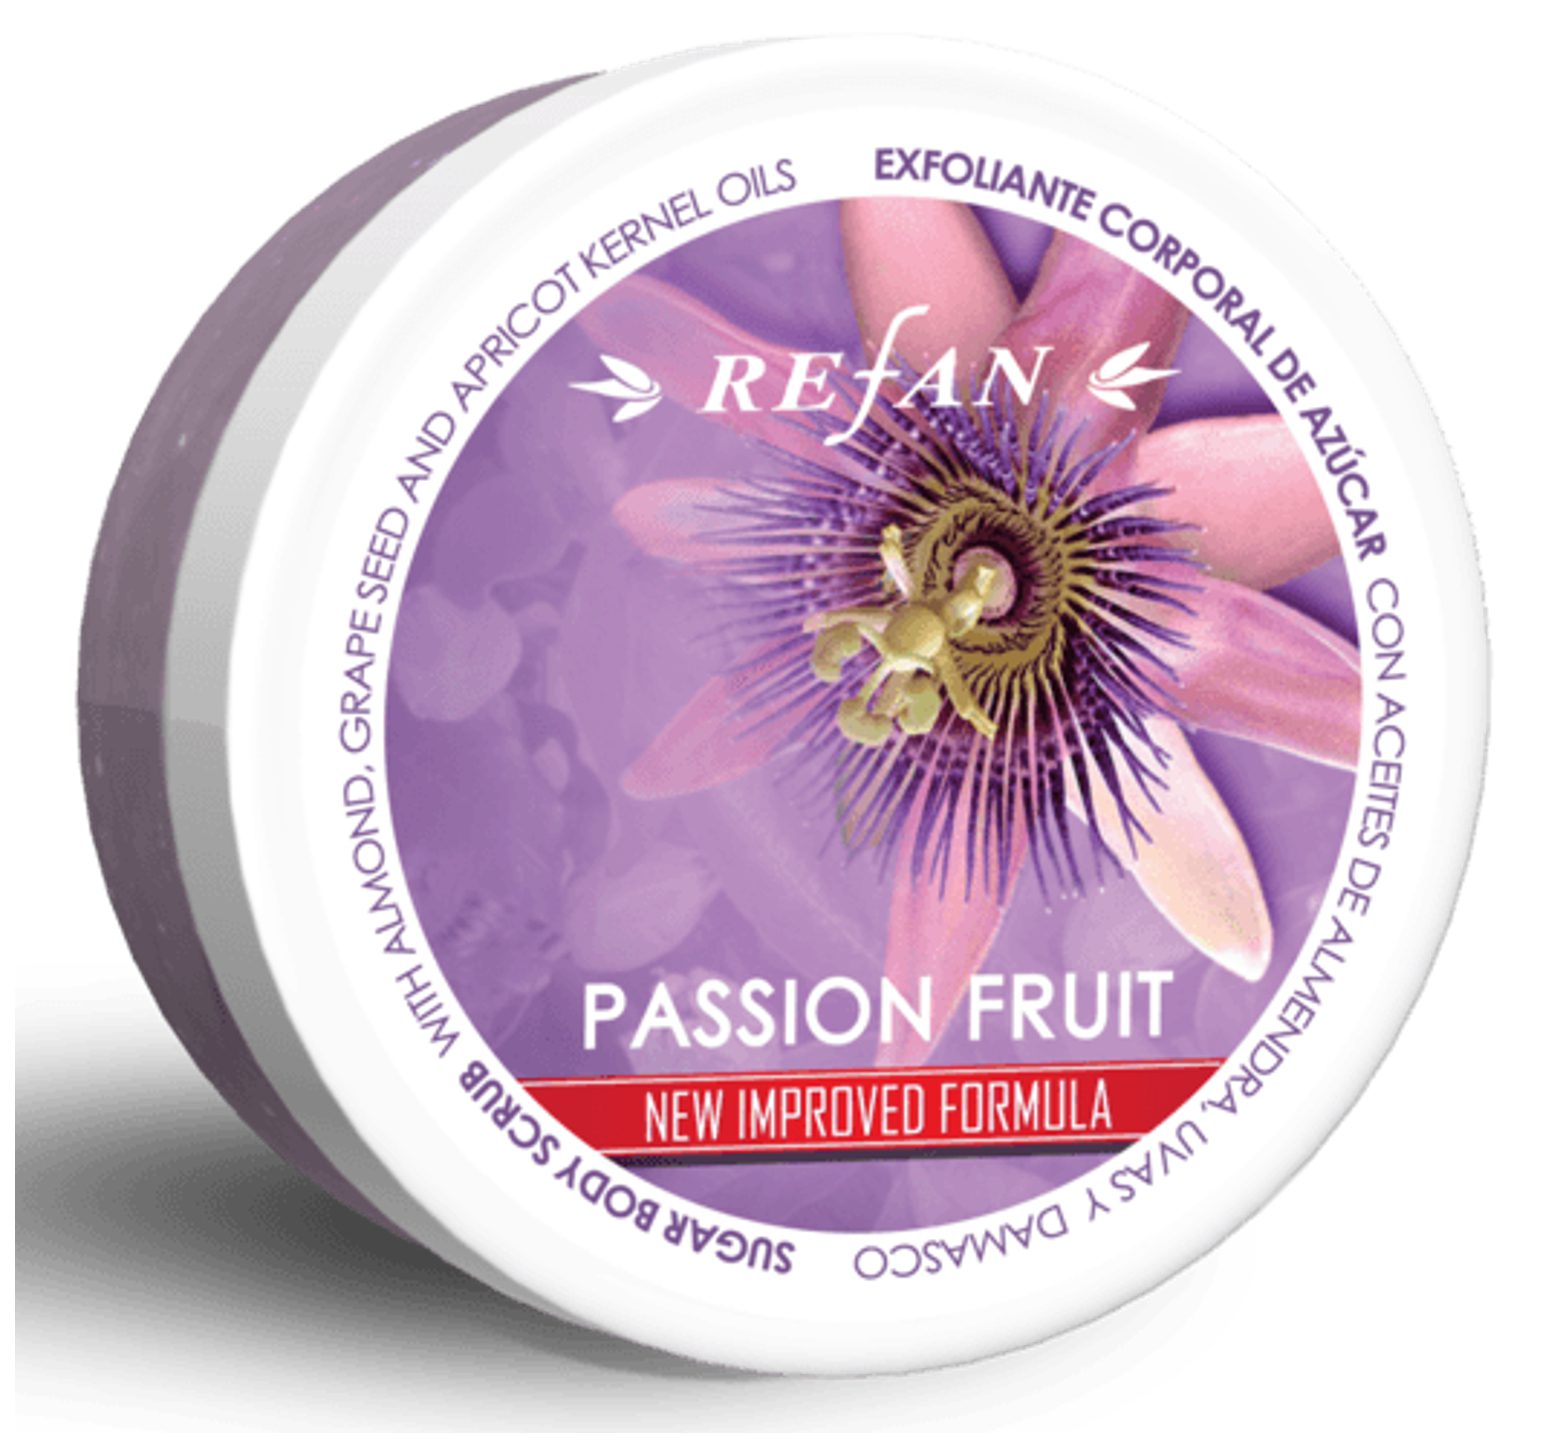 passion fruit scrub